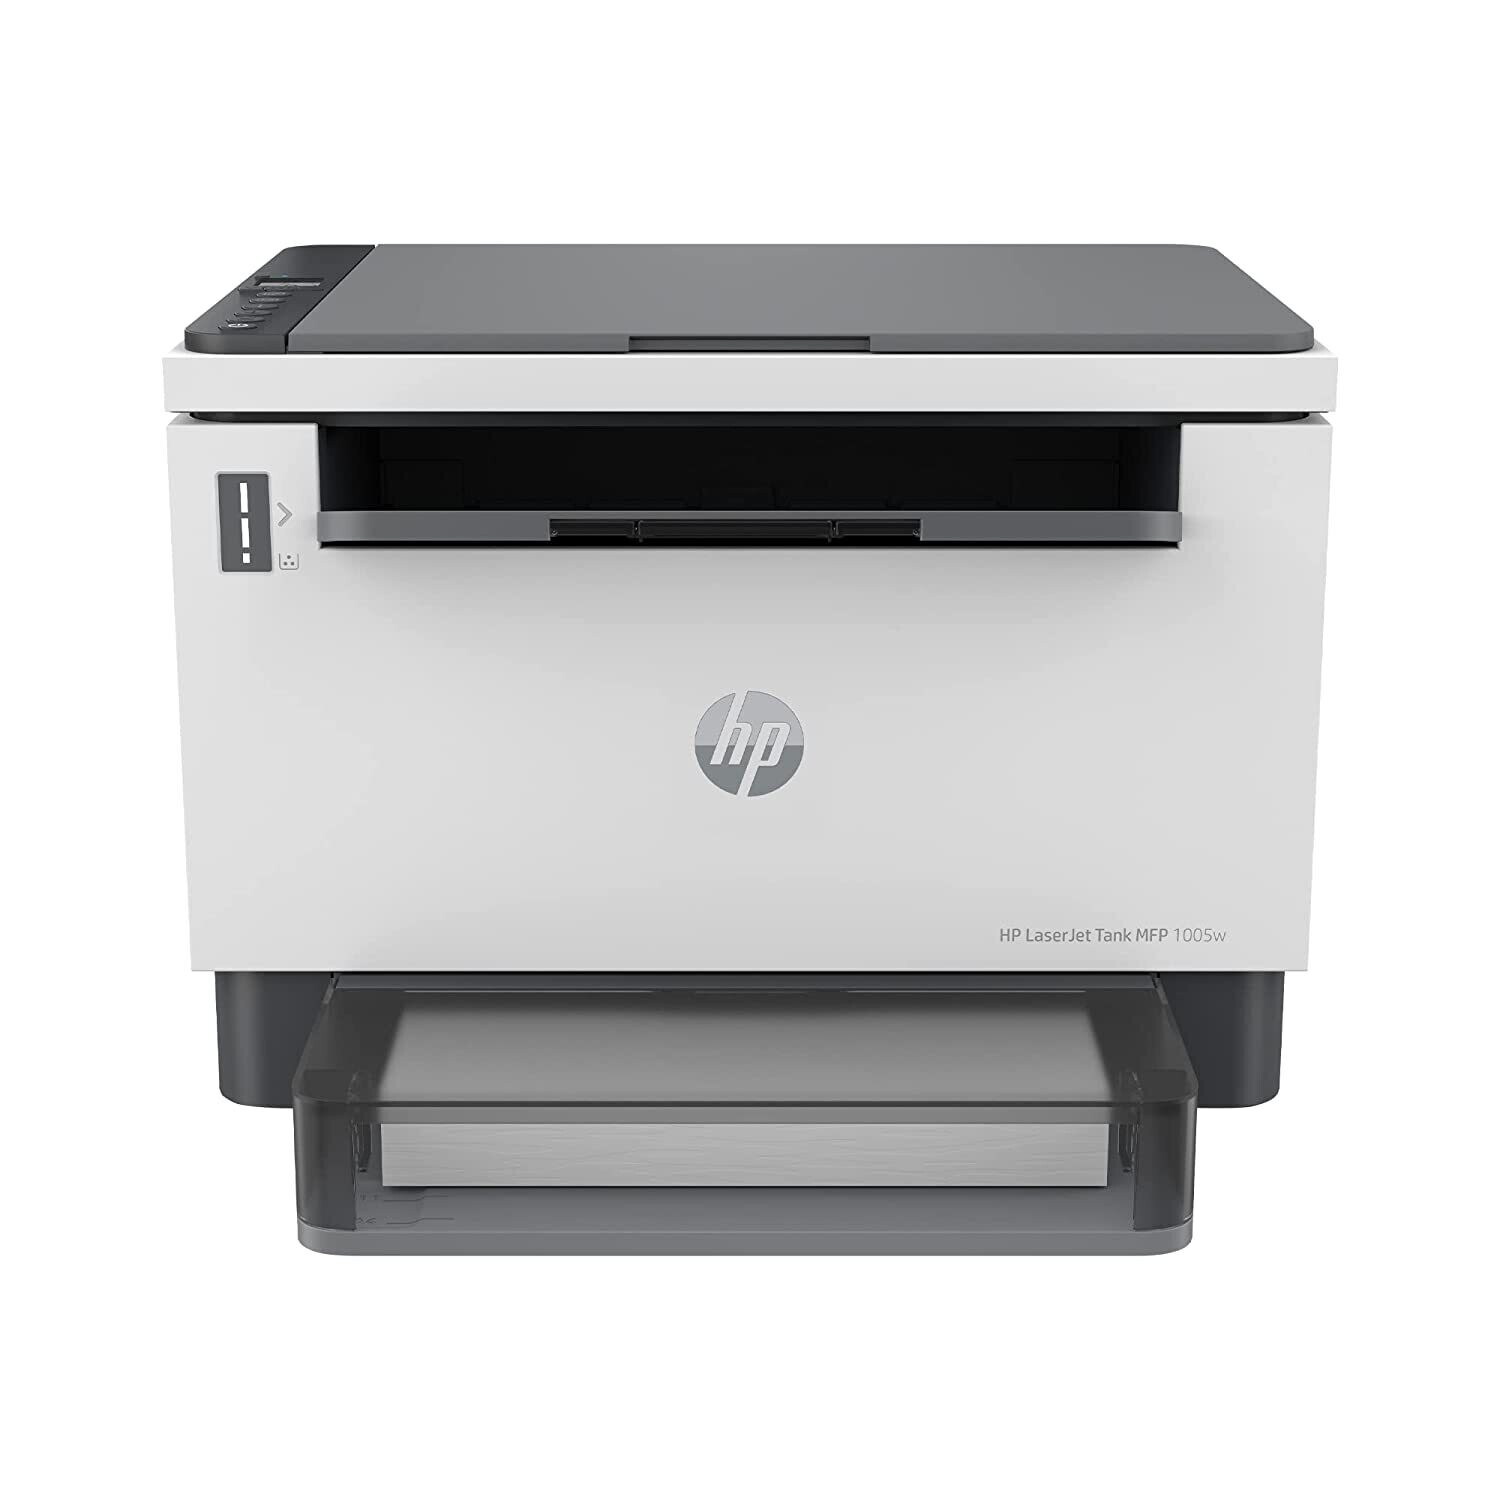 HP MFP 1005W Laserjet Tank Printer